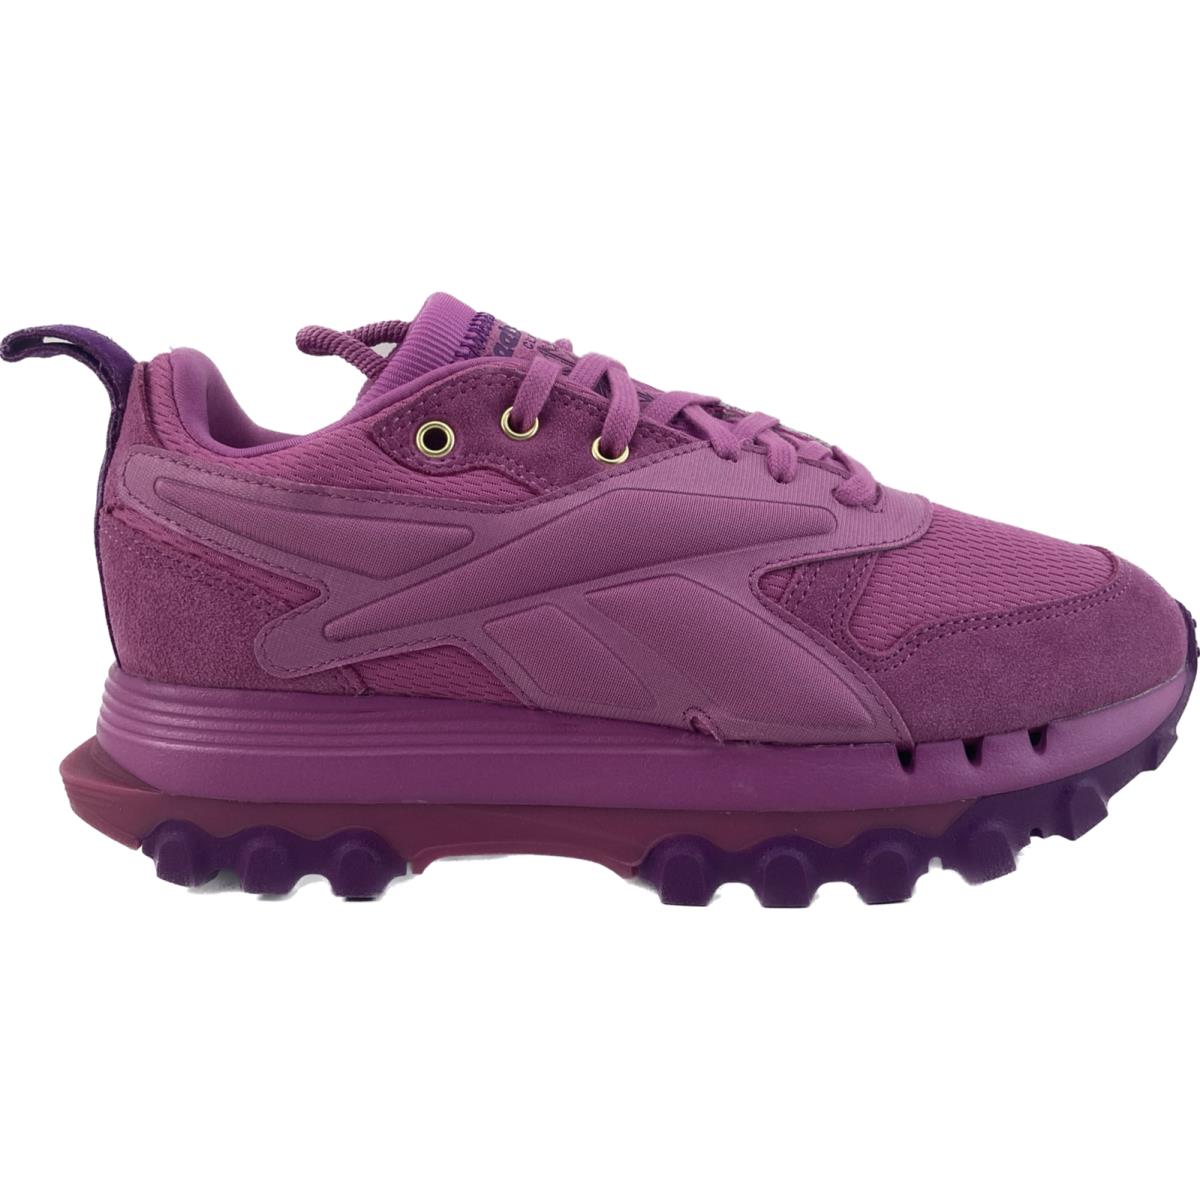 Womens Reebok Cardi B V2 Classic Leather Shoes Size 7 Ultraberry Pink GW8875 - Ultraberry Pink Purple